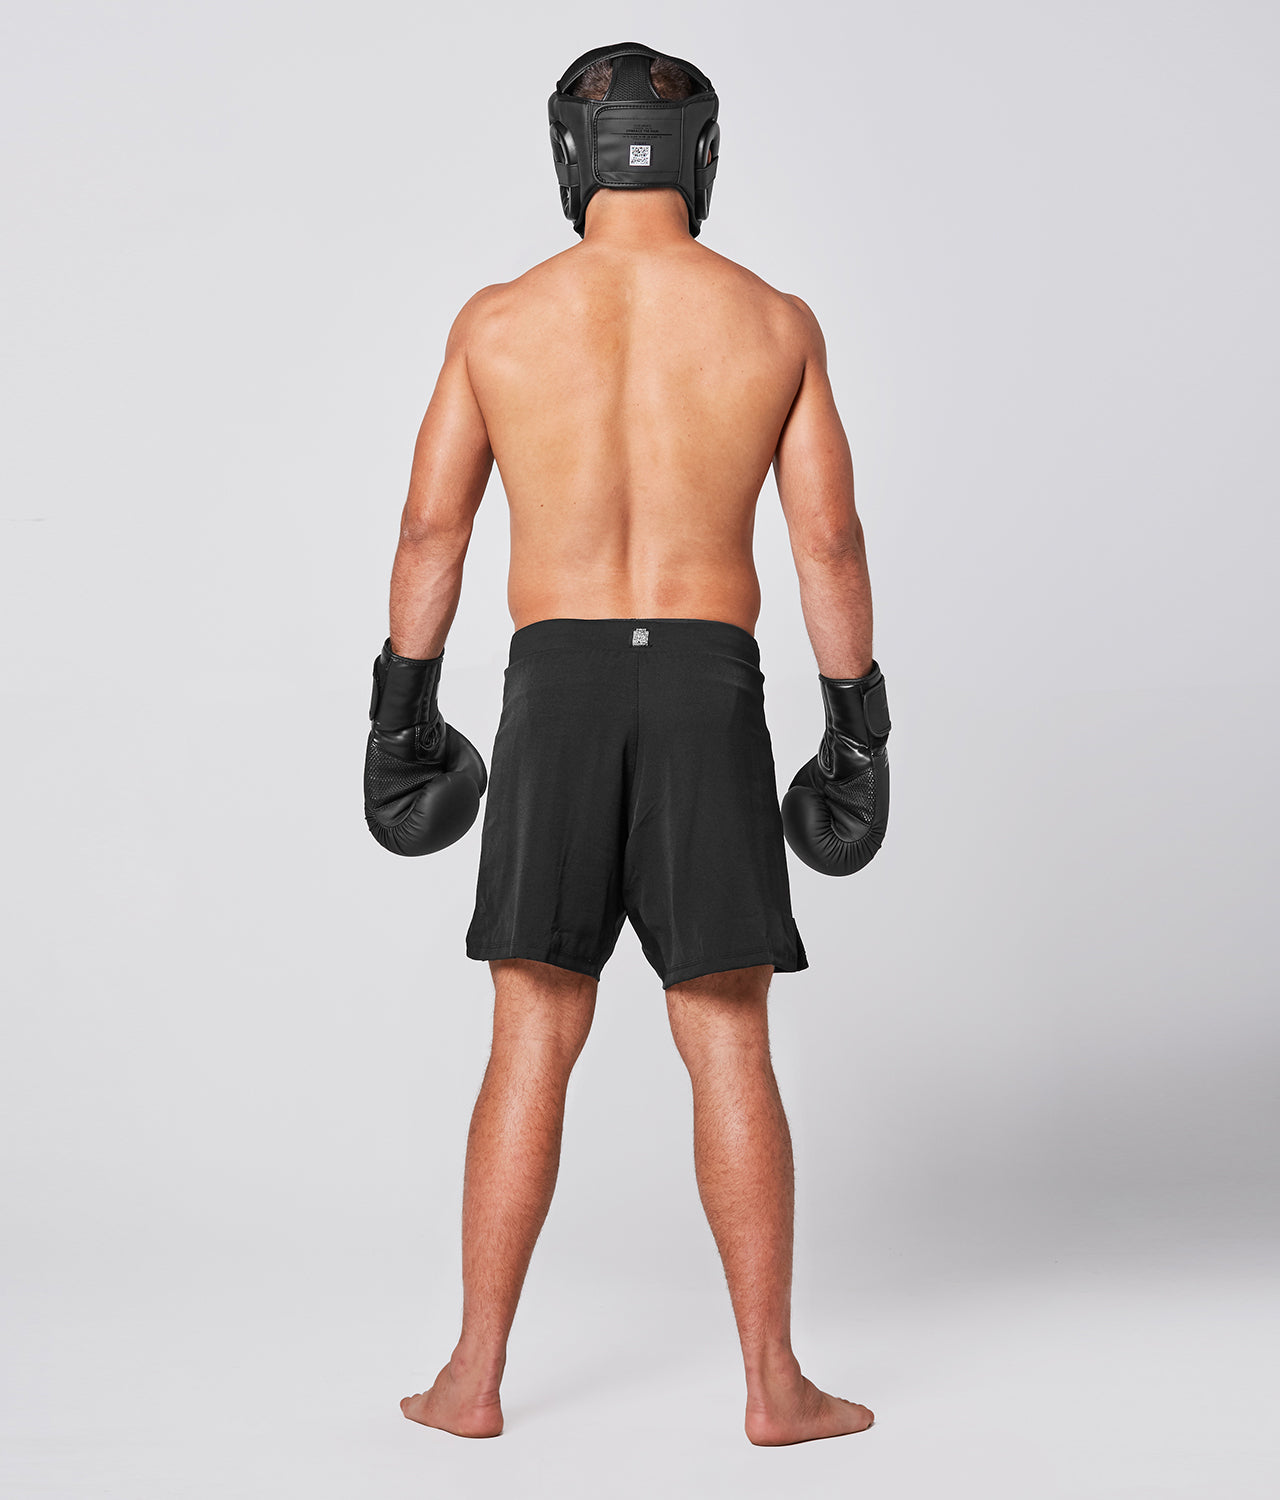 Elite Sports Adults' Essential Black/Black Brazilian Jiu Jitsu BJJ Headgear Back View